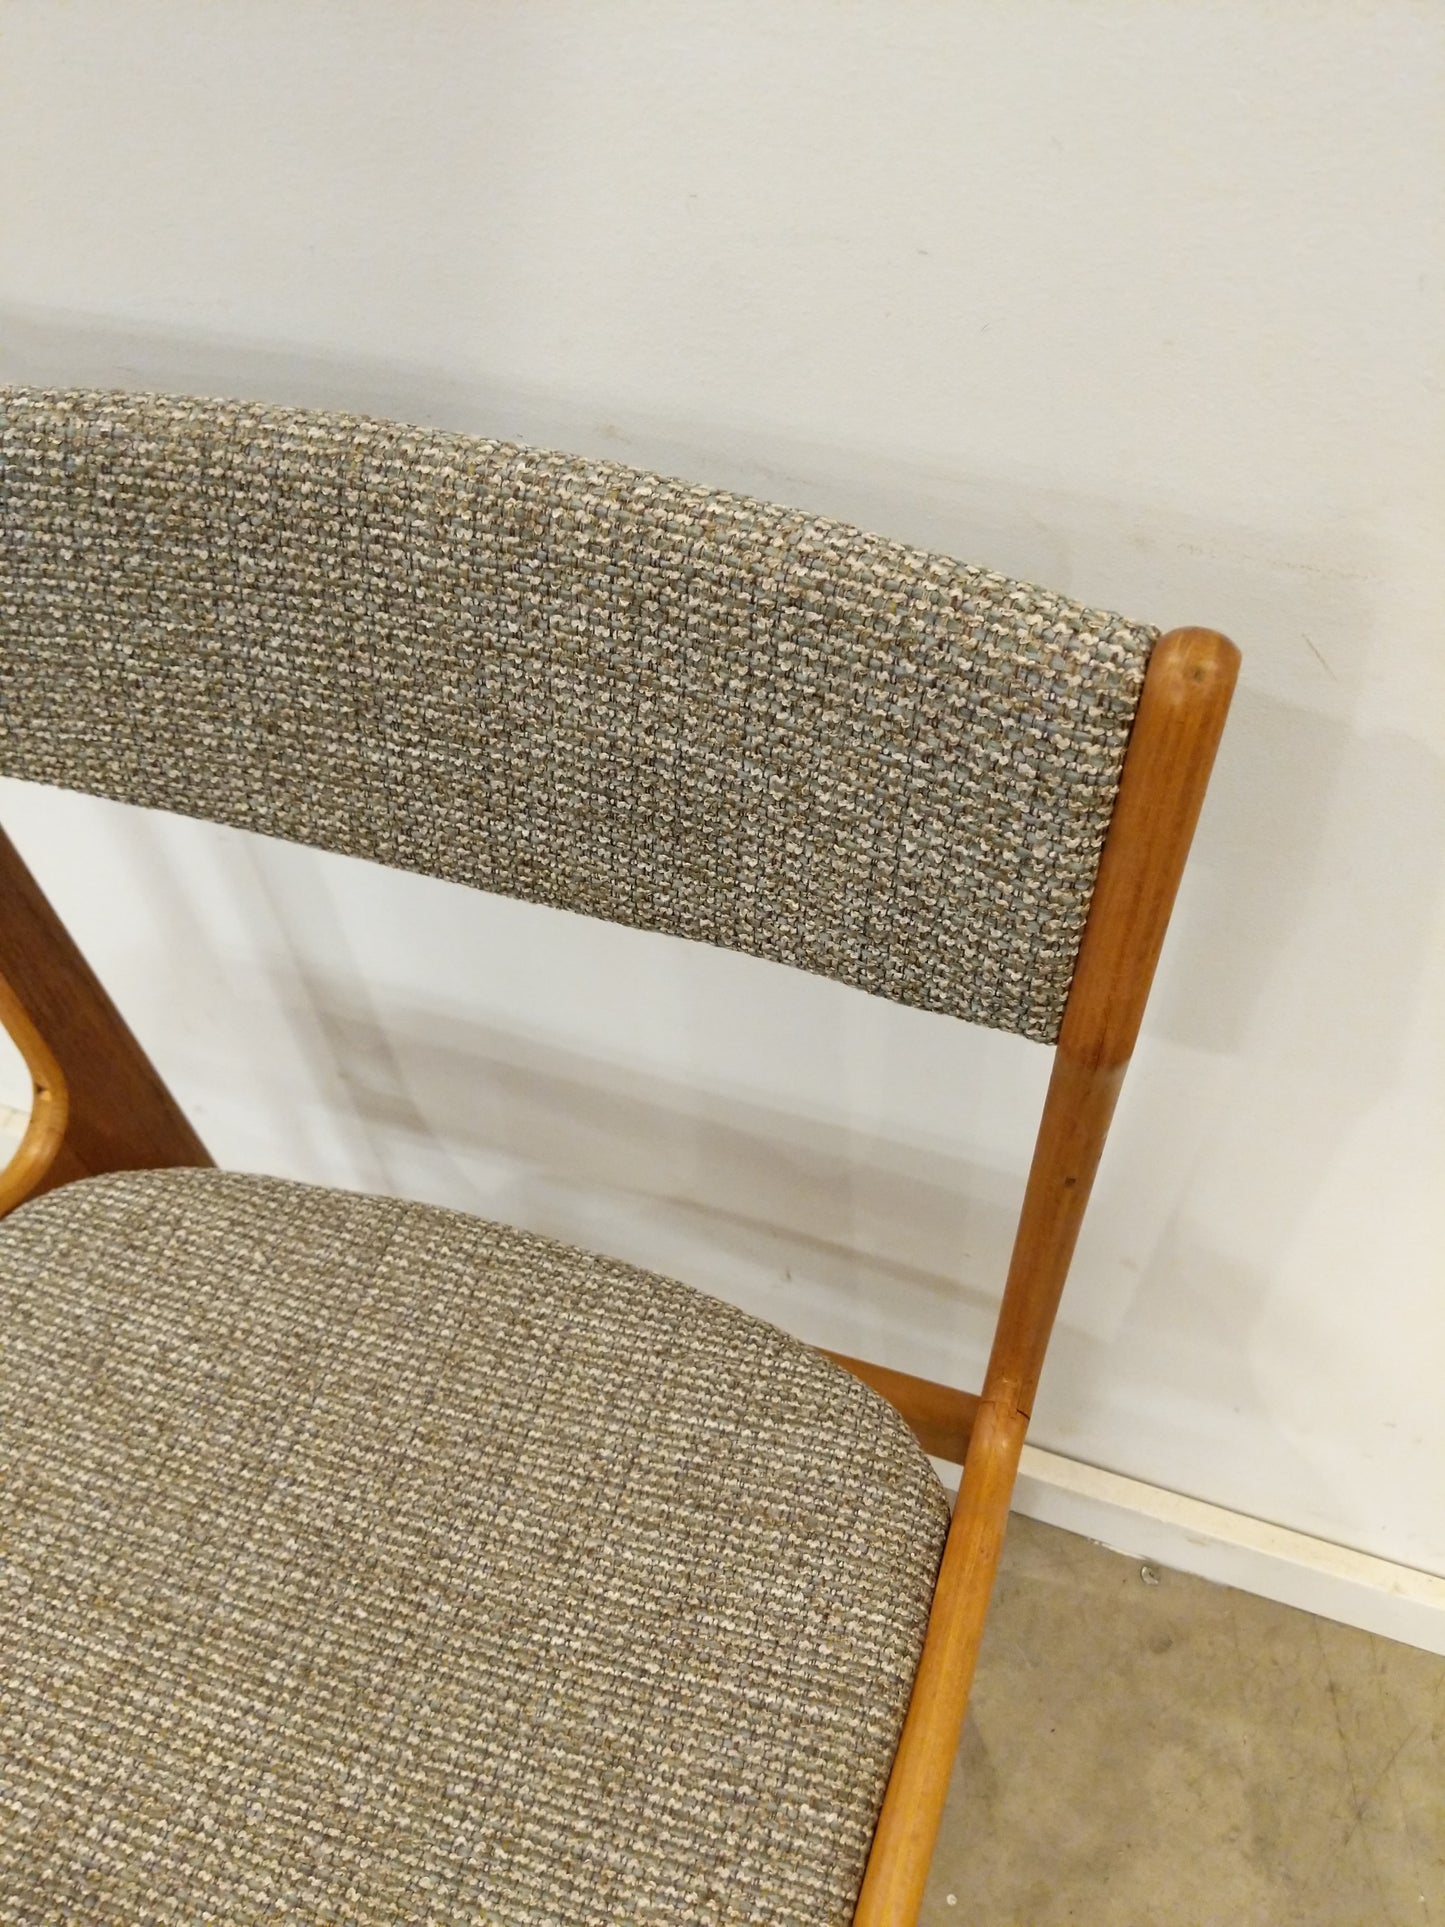 Vintage Danish Modern Chair